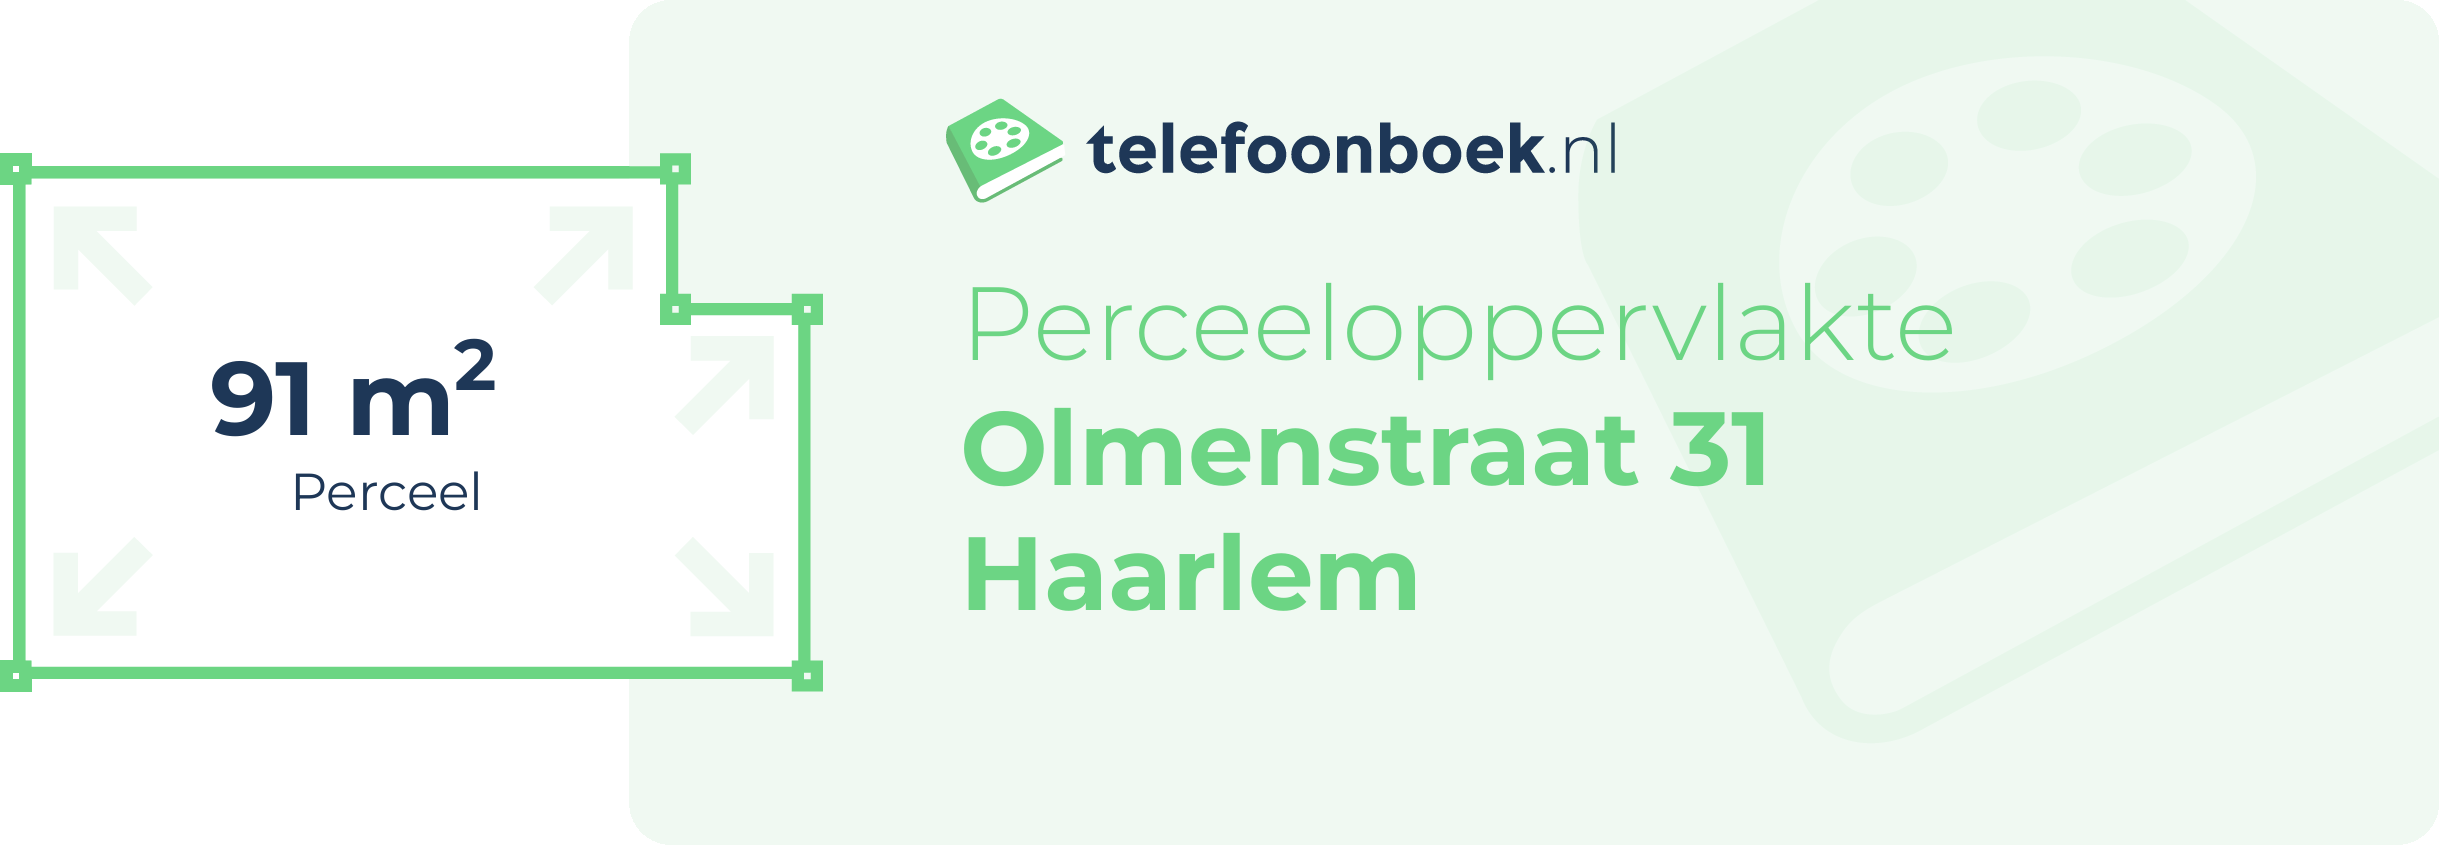 Perceeloppervlakte Olmenstraat 31 Haarlem